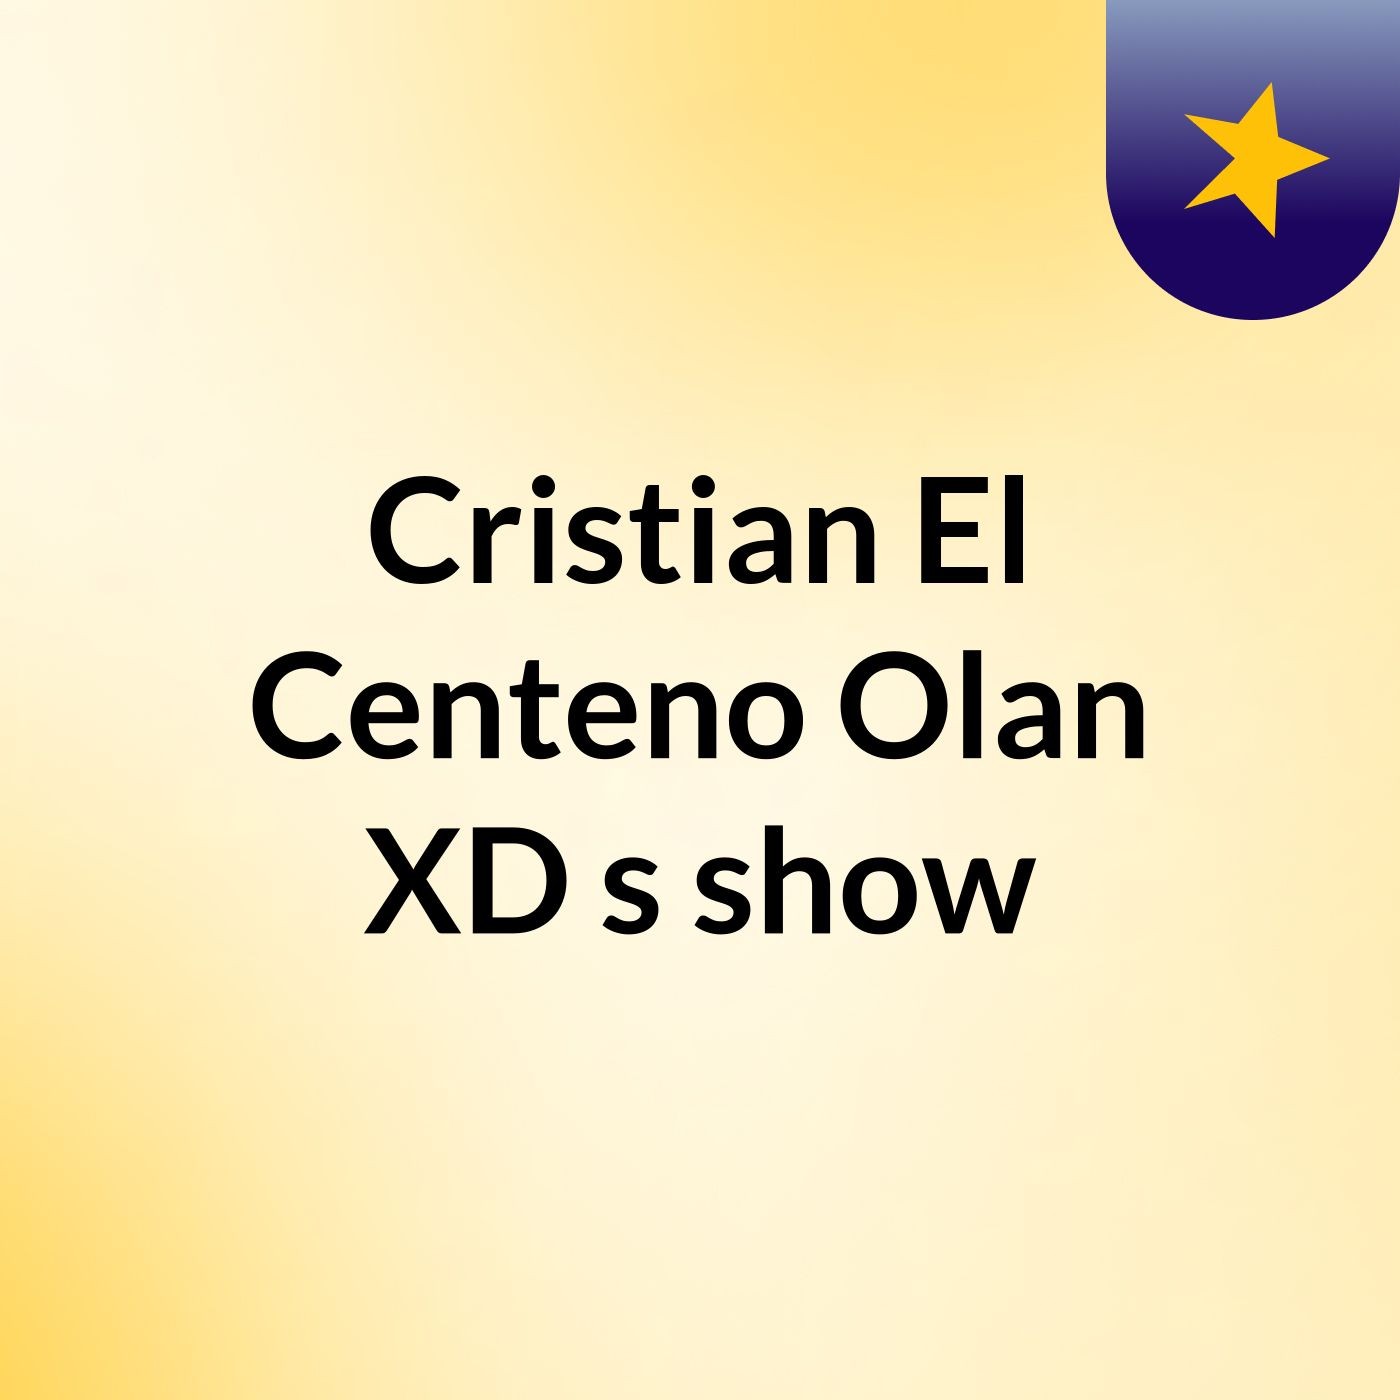 Cristian El Centeno Olan XD's show